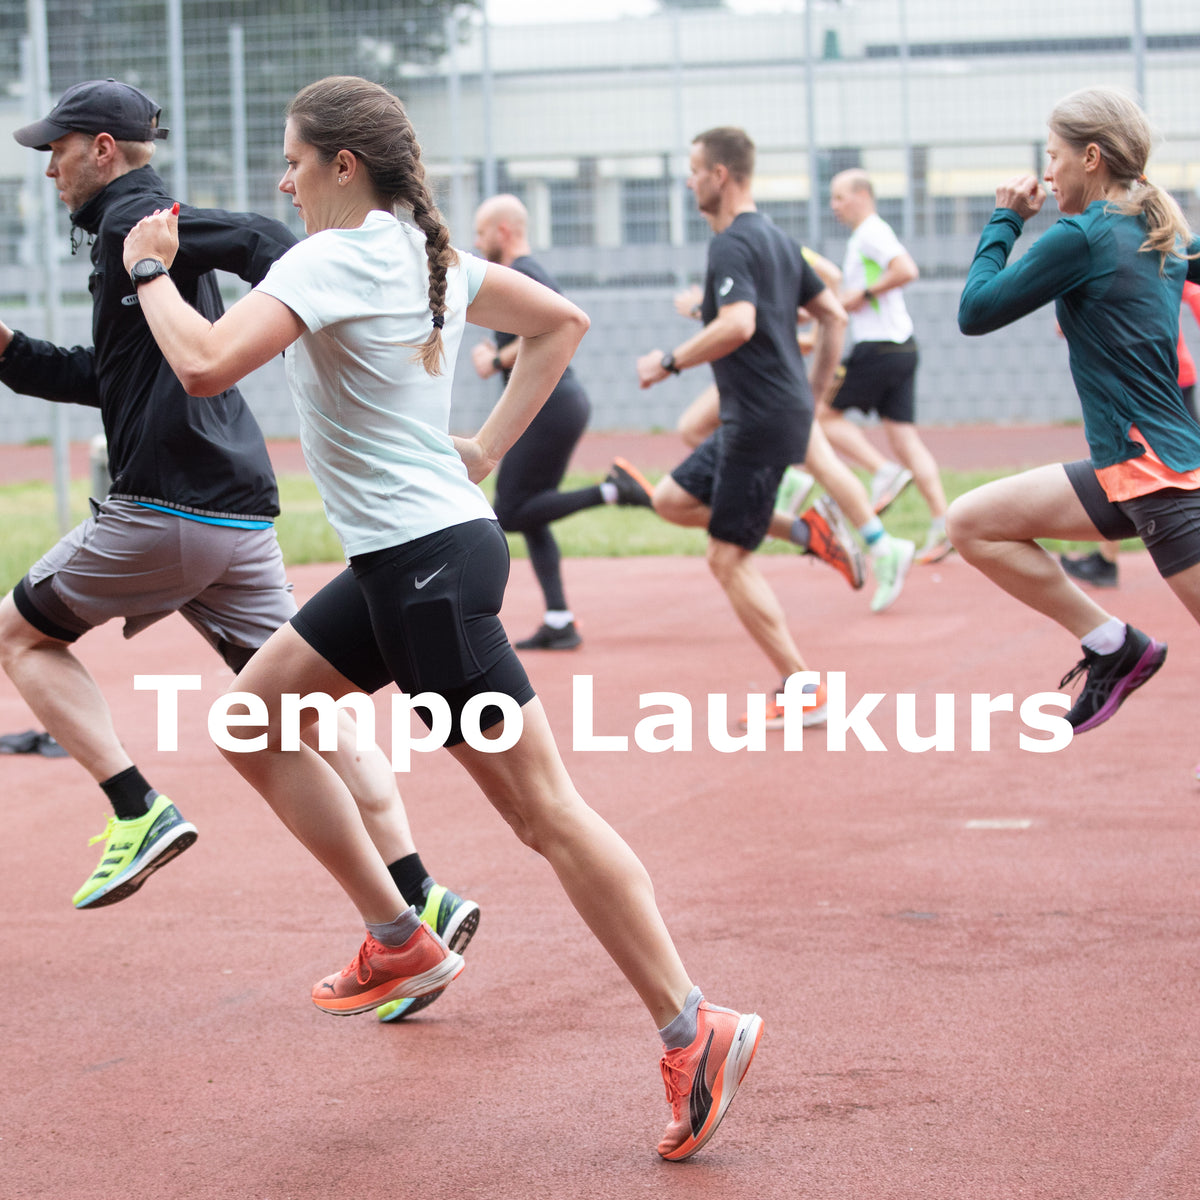 Tempo-Kurs – Tempotraining Laufkurs für alle in Hannover